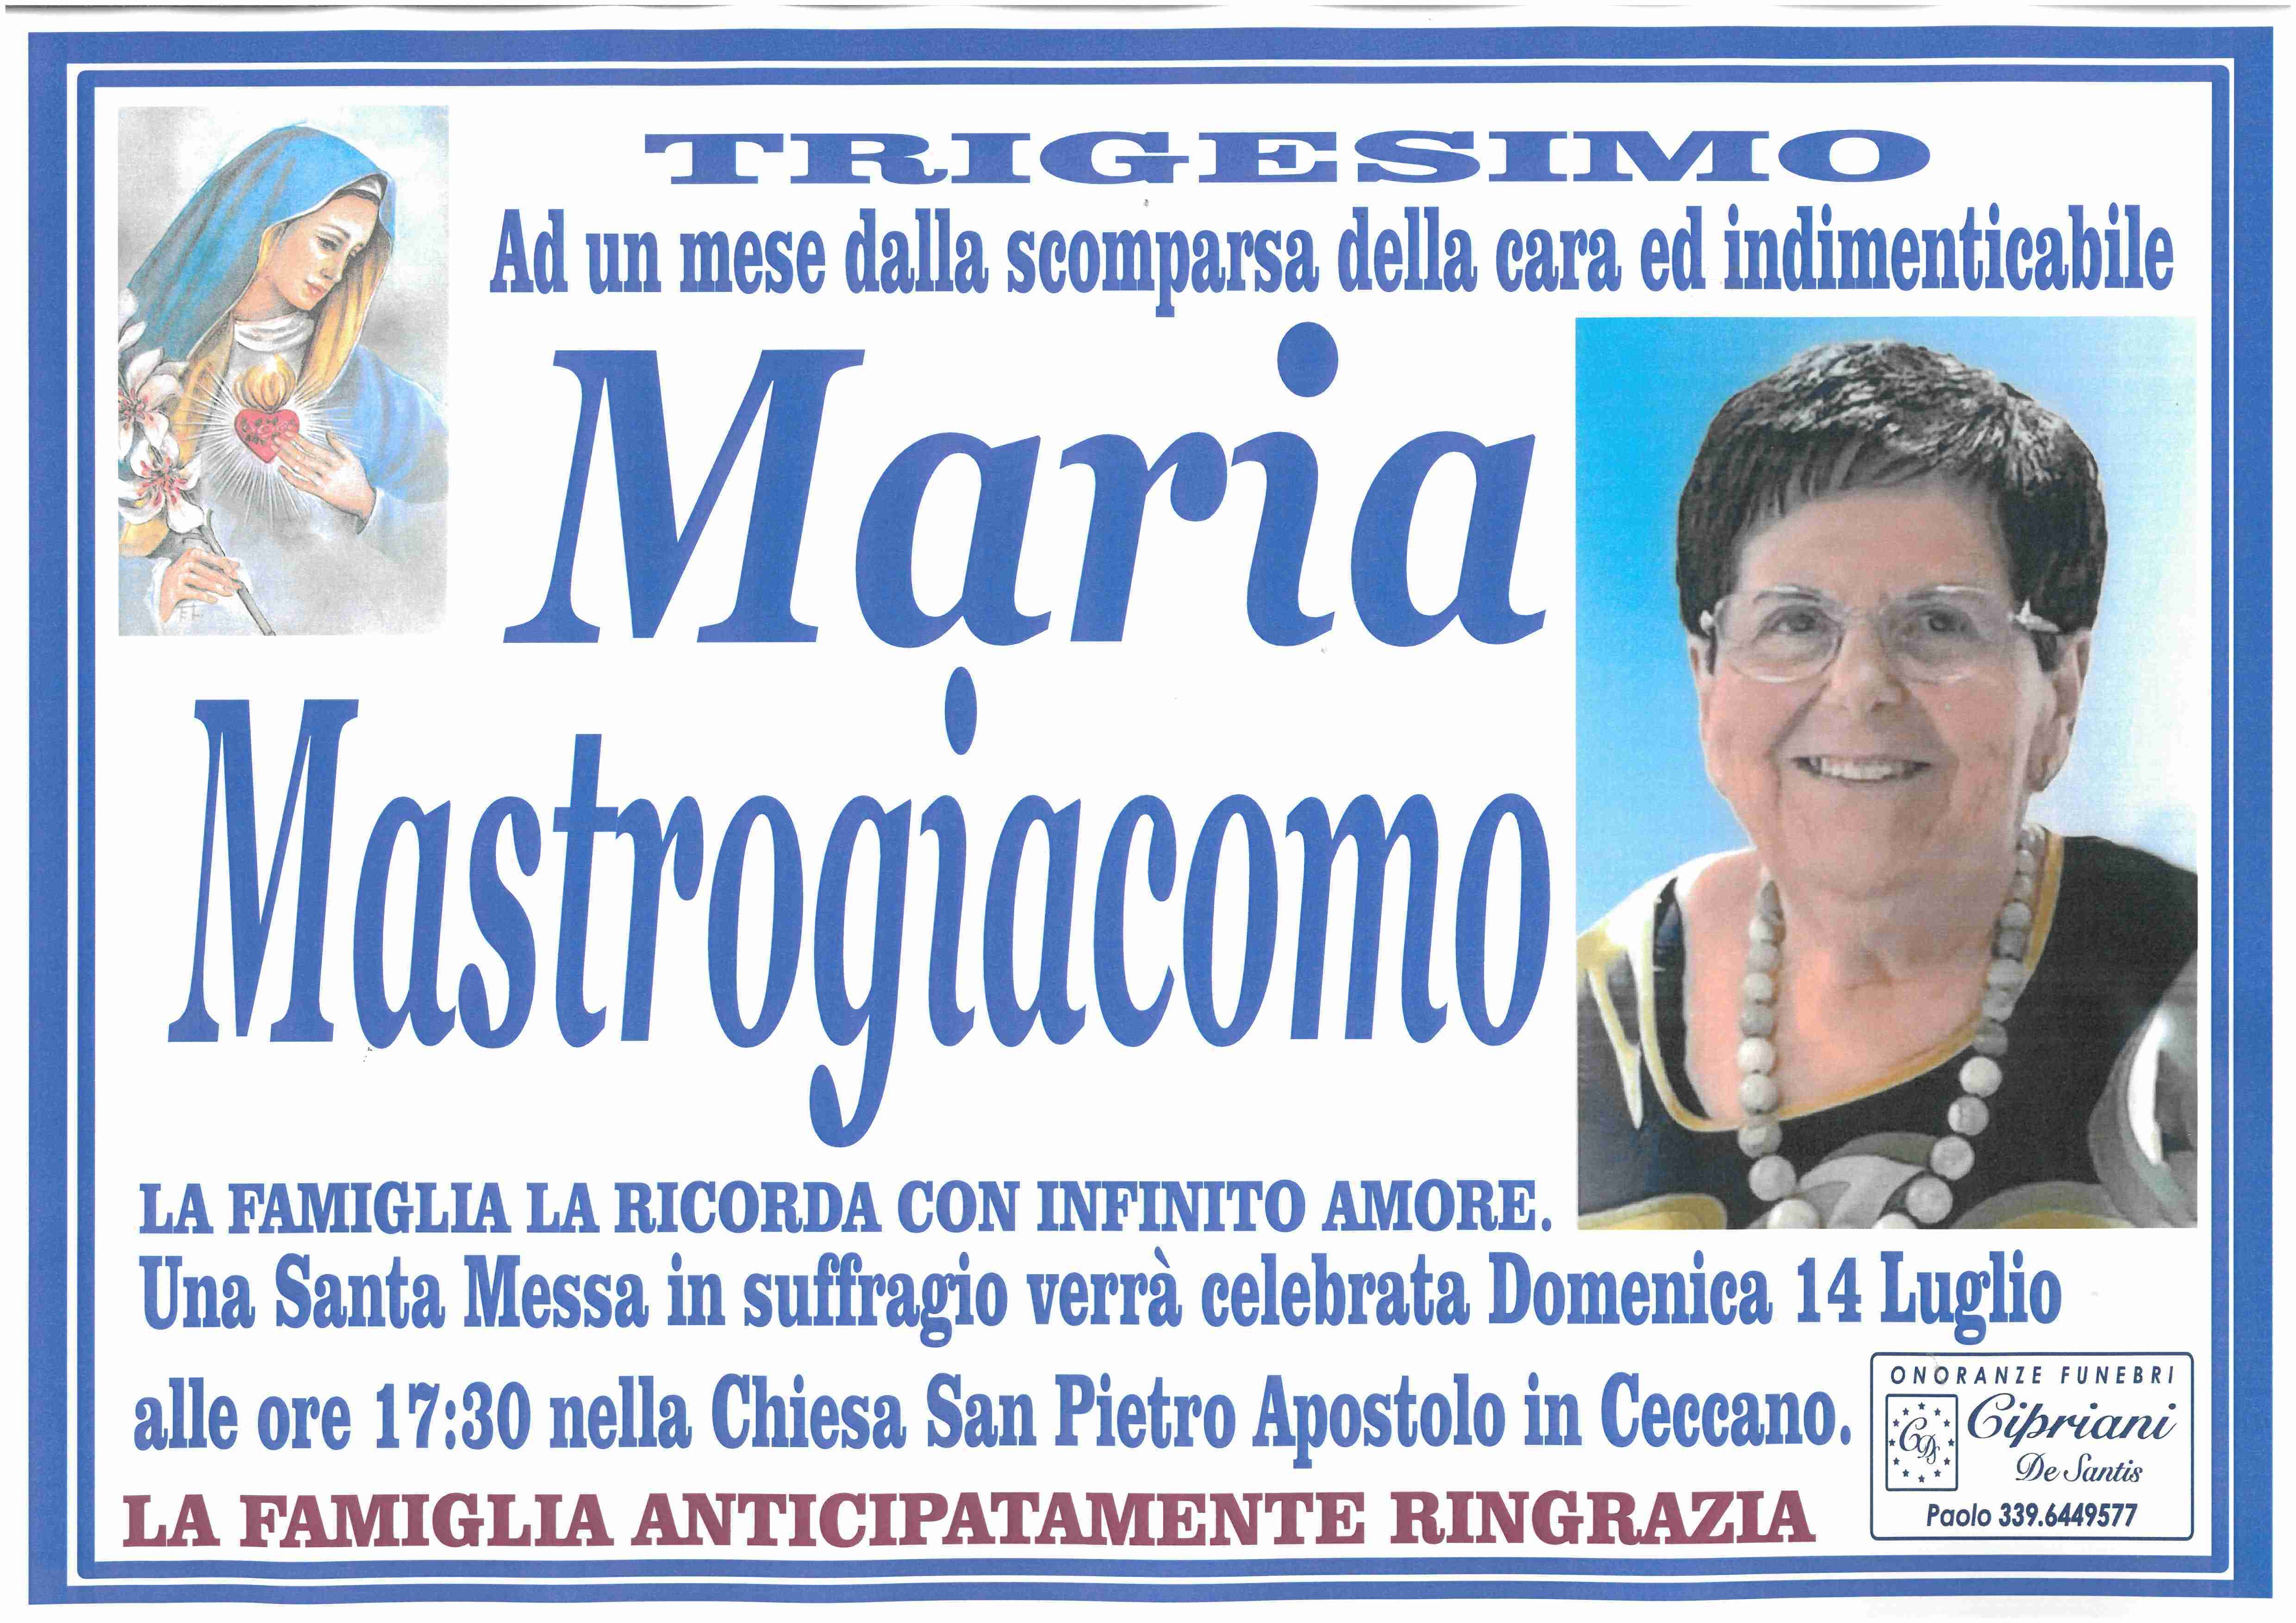 Maria Mastrogiacomo